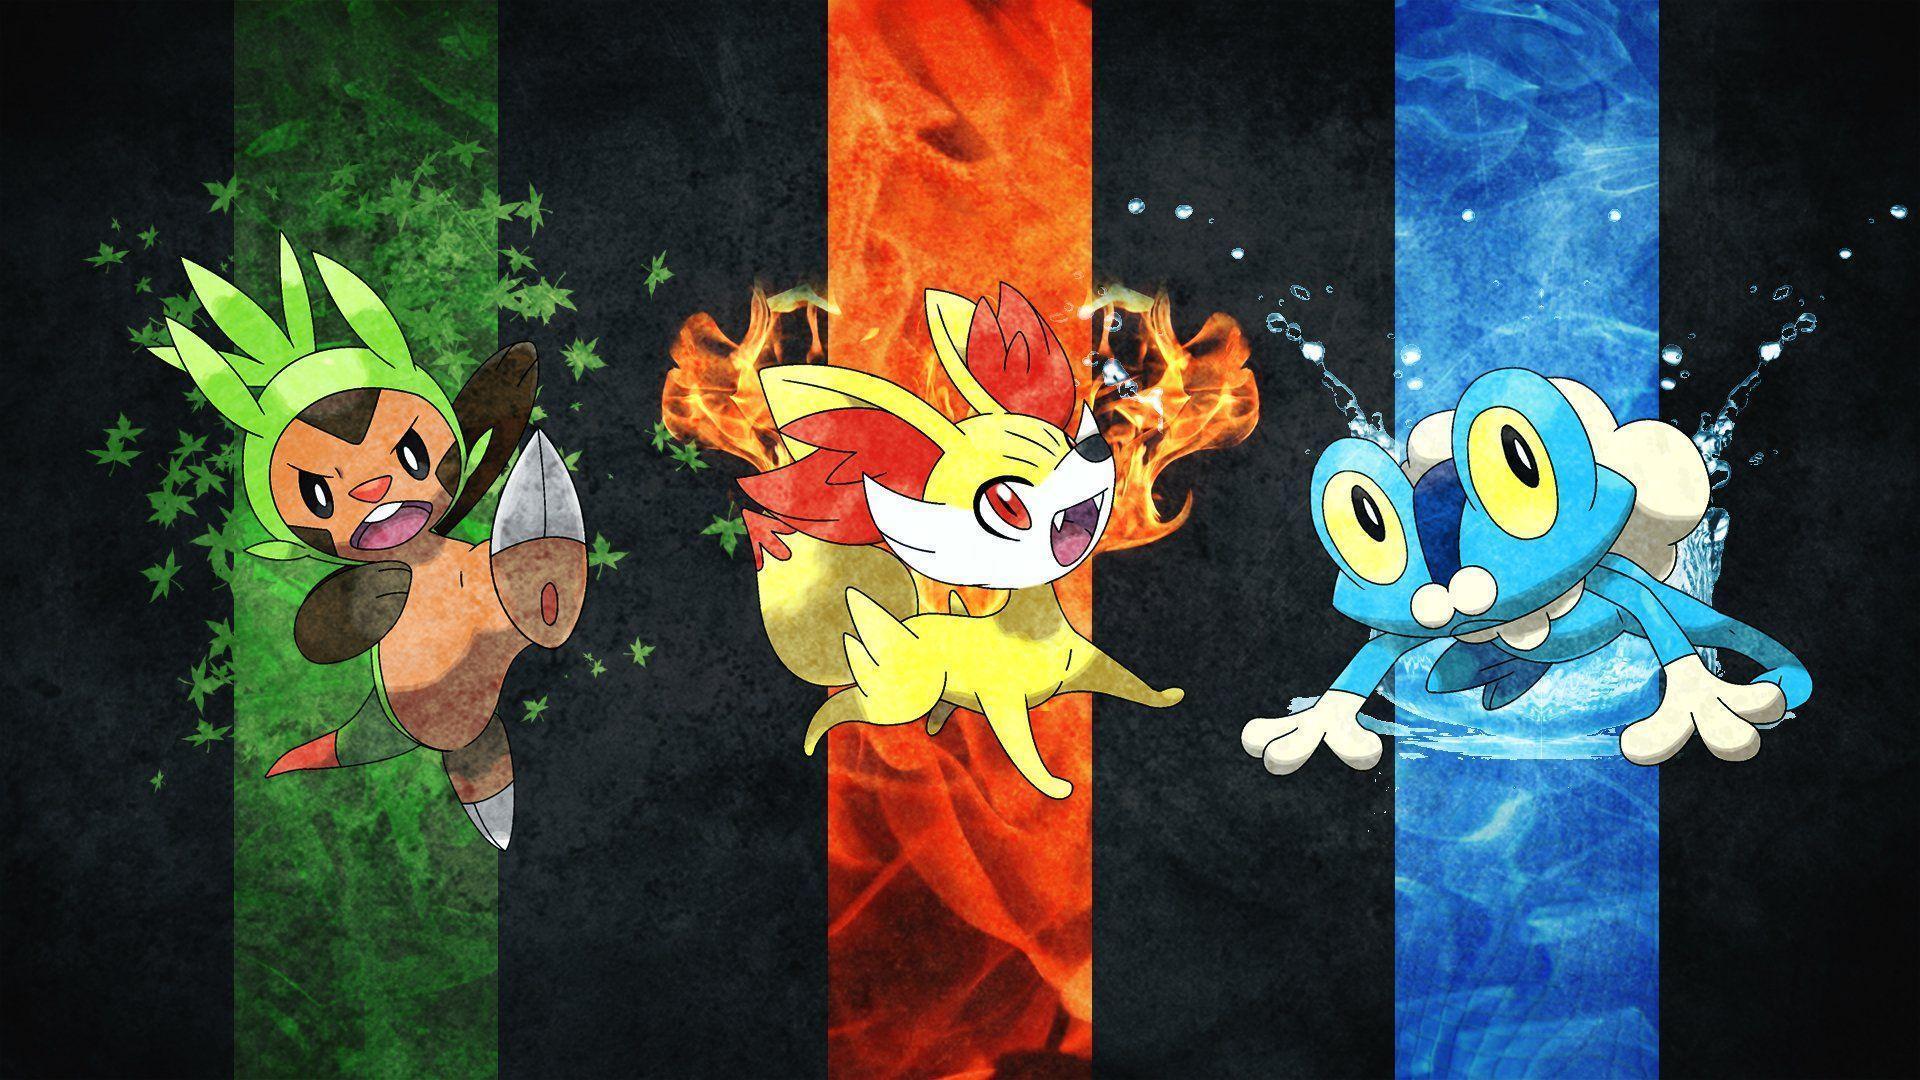 Froakie (Pokémon) HD Wallpaper and Background Image